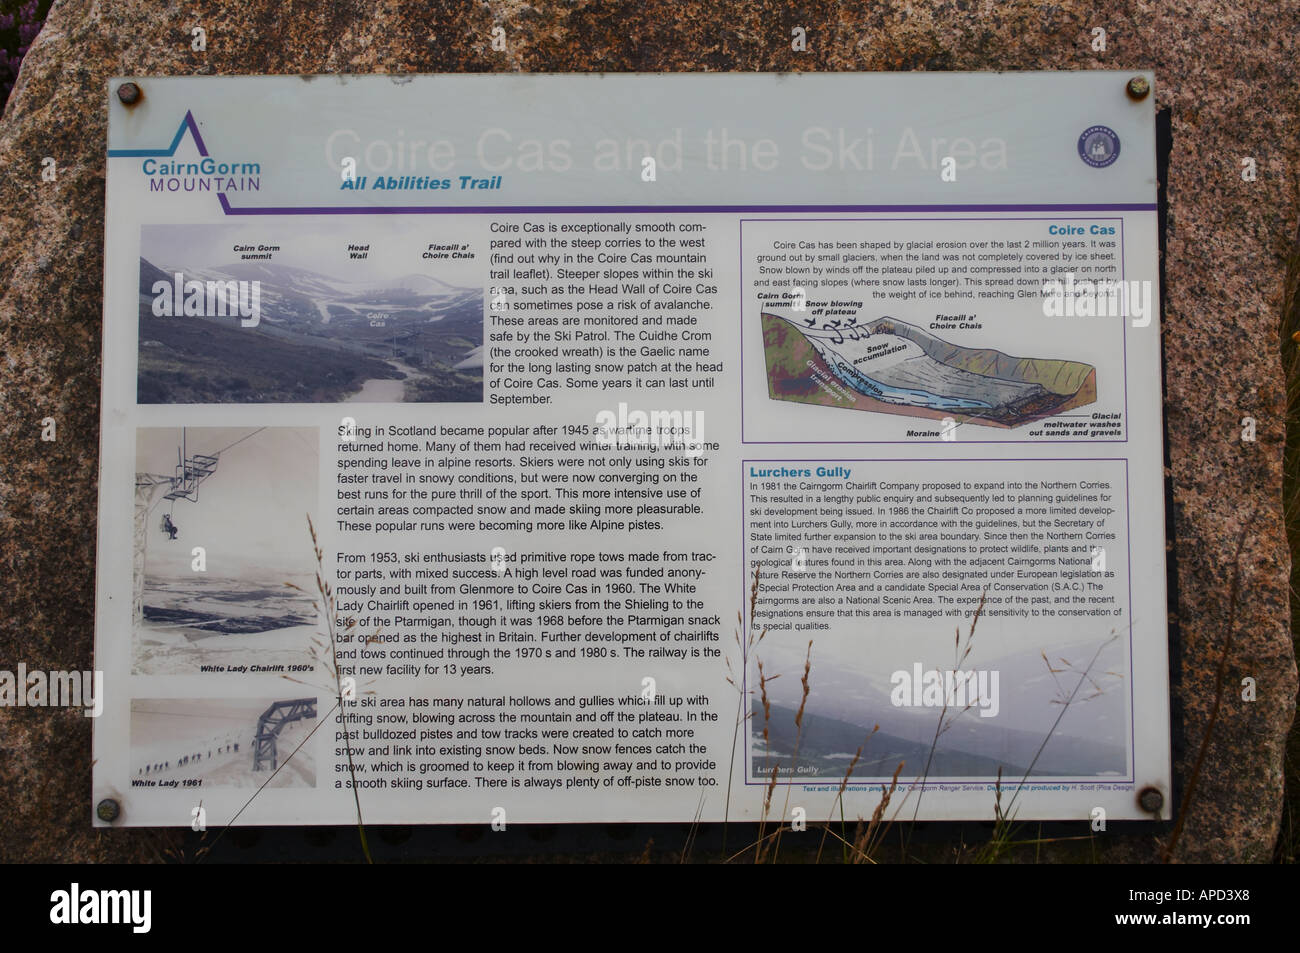 Cairngorm Mountain Information Board Stock Photo